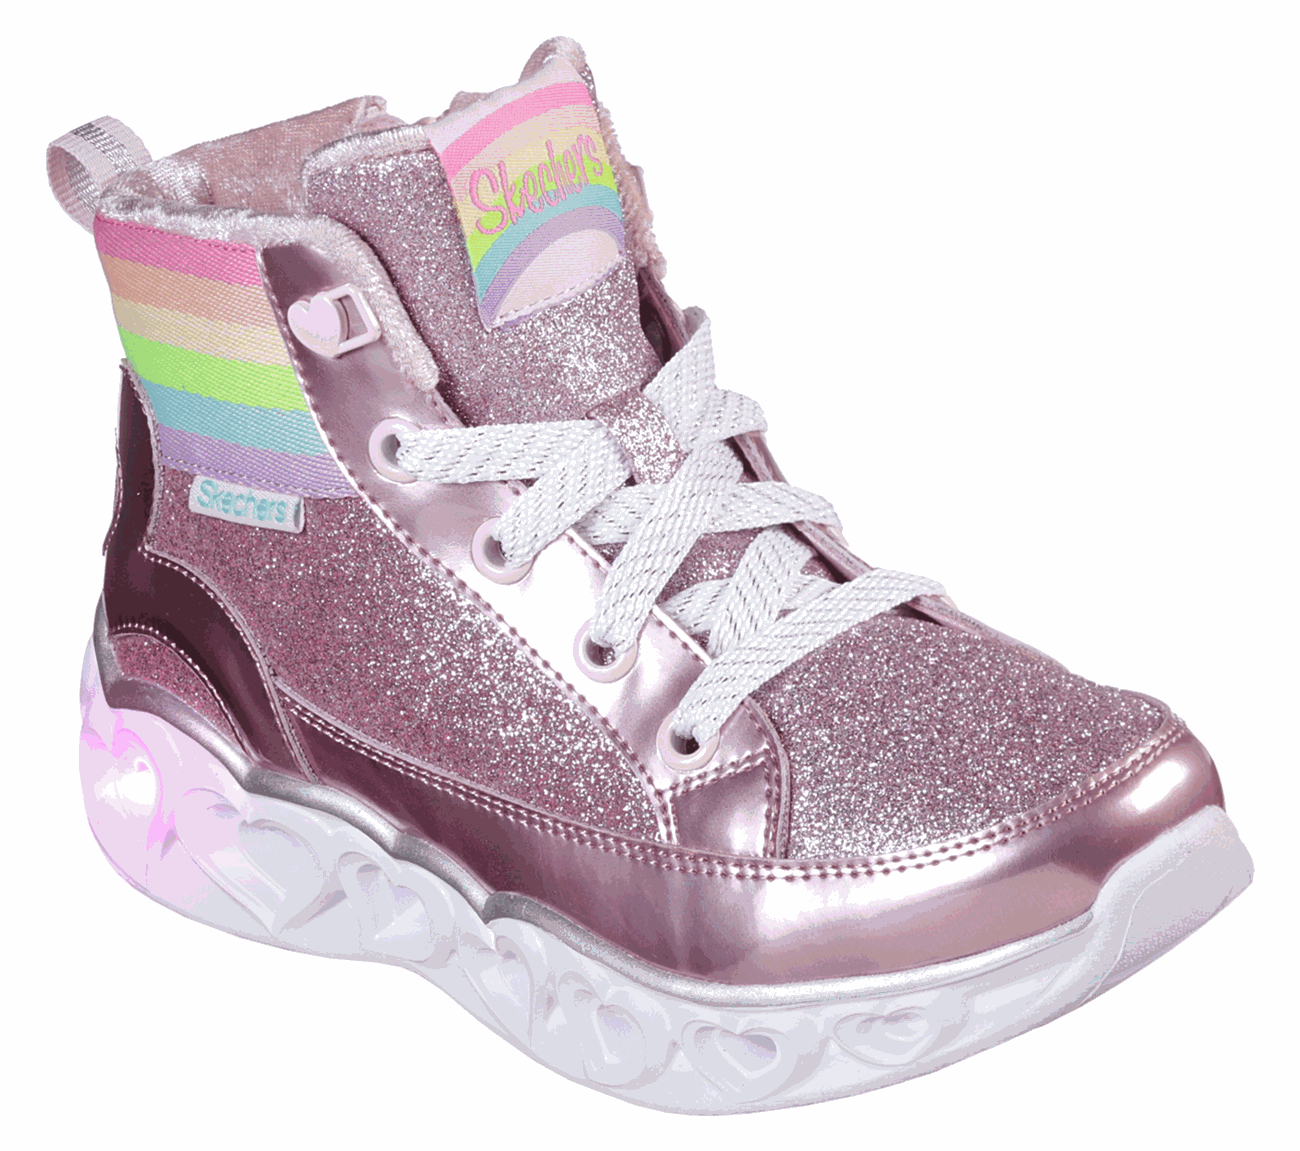 Girls’ light-up sneakers